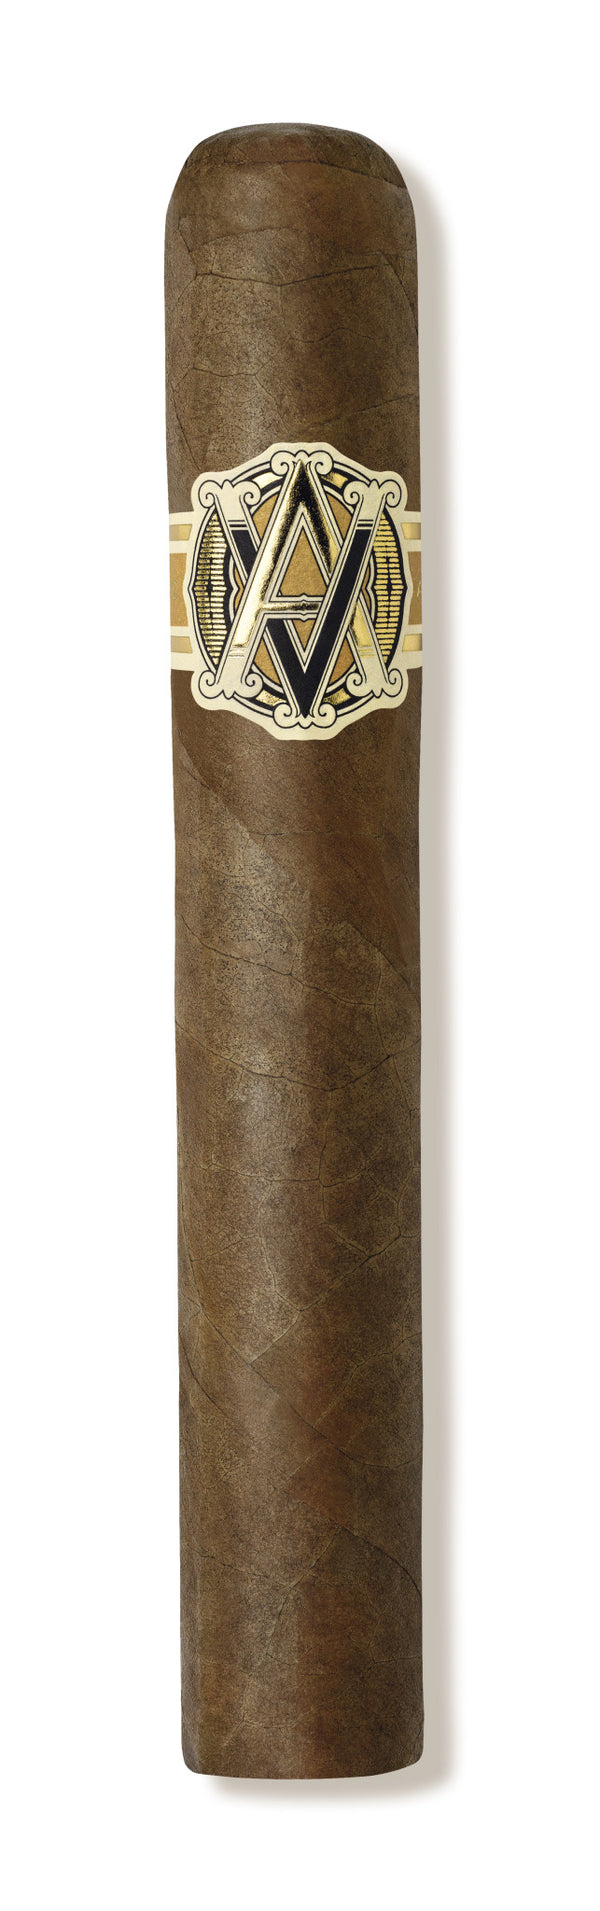 Avo Cigars Classic No.6